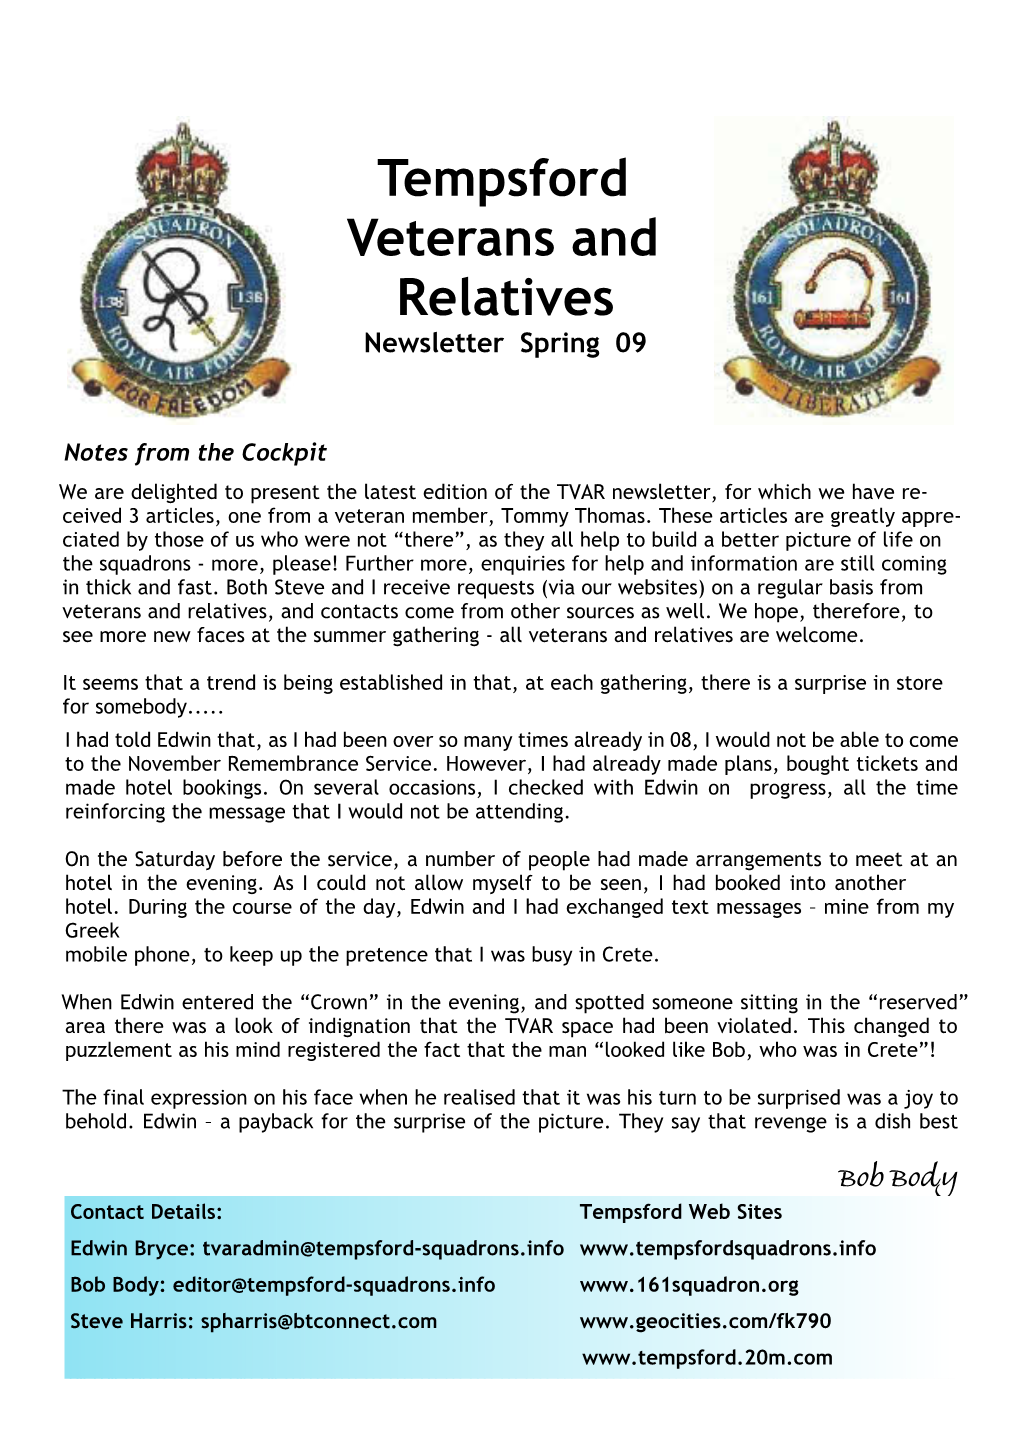 Tempsford Veterans and Relatives Newsletter Spring 09